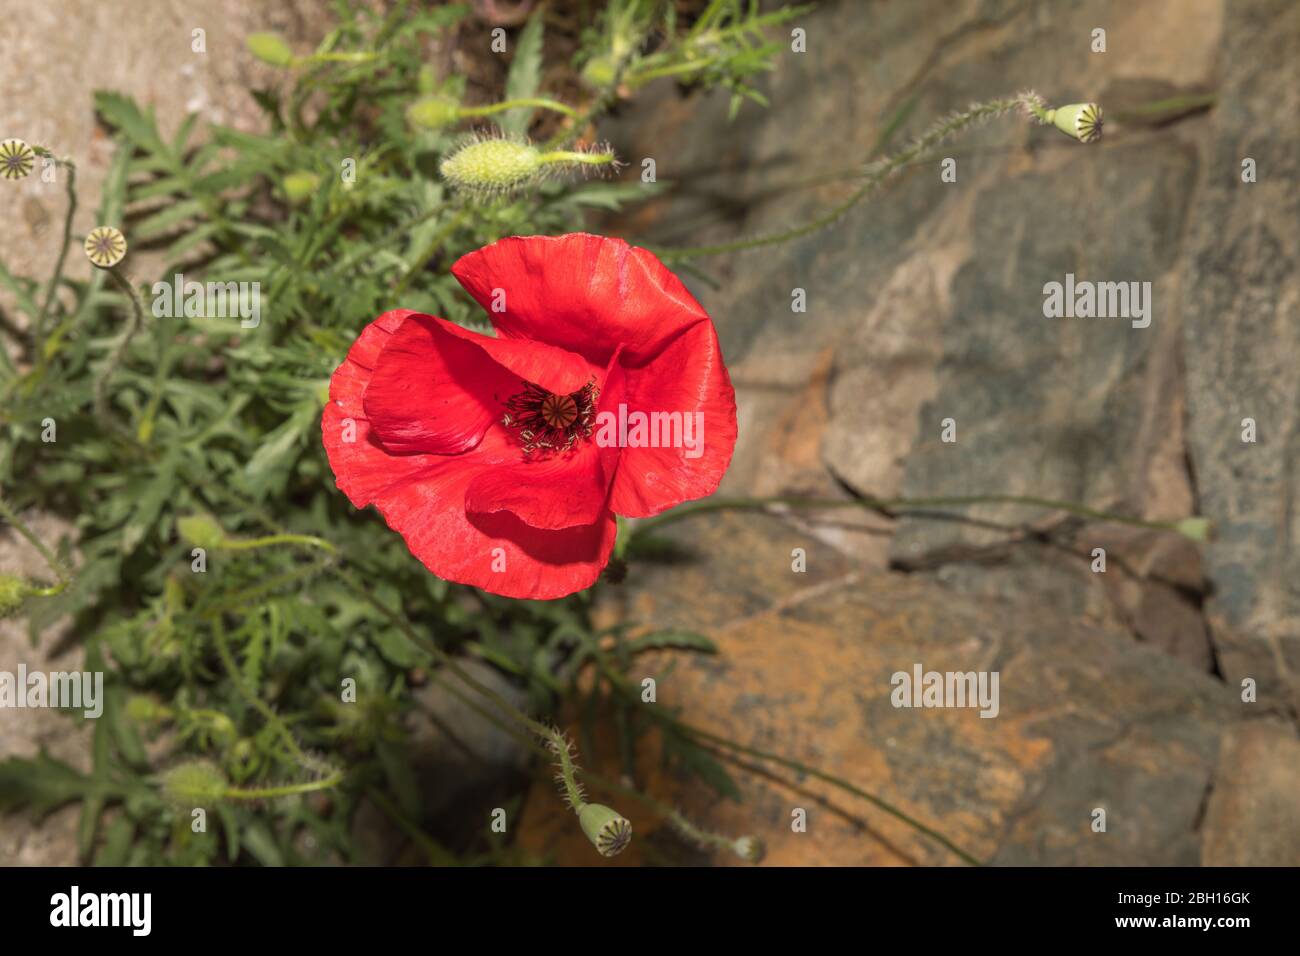 Single red poppy flower head in full bloom. Stock Image. Stock Photo